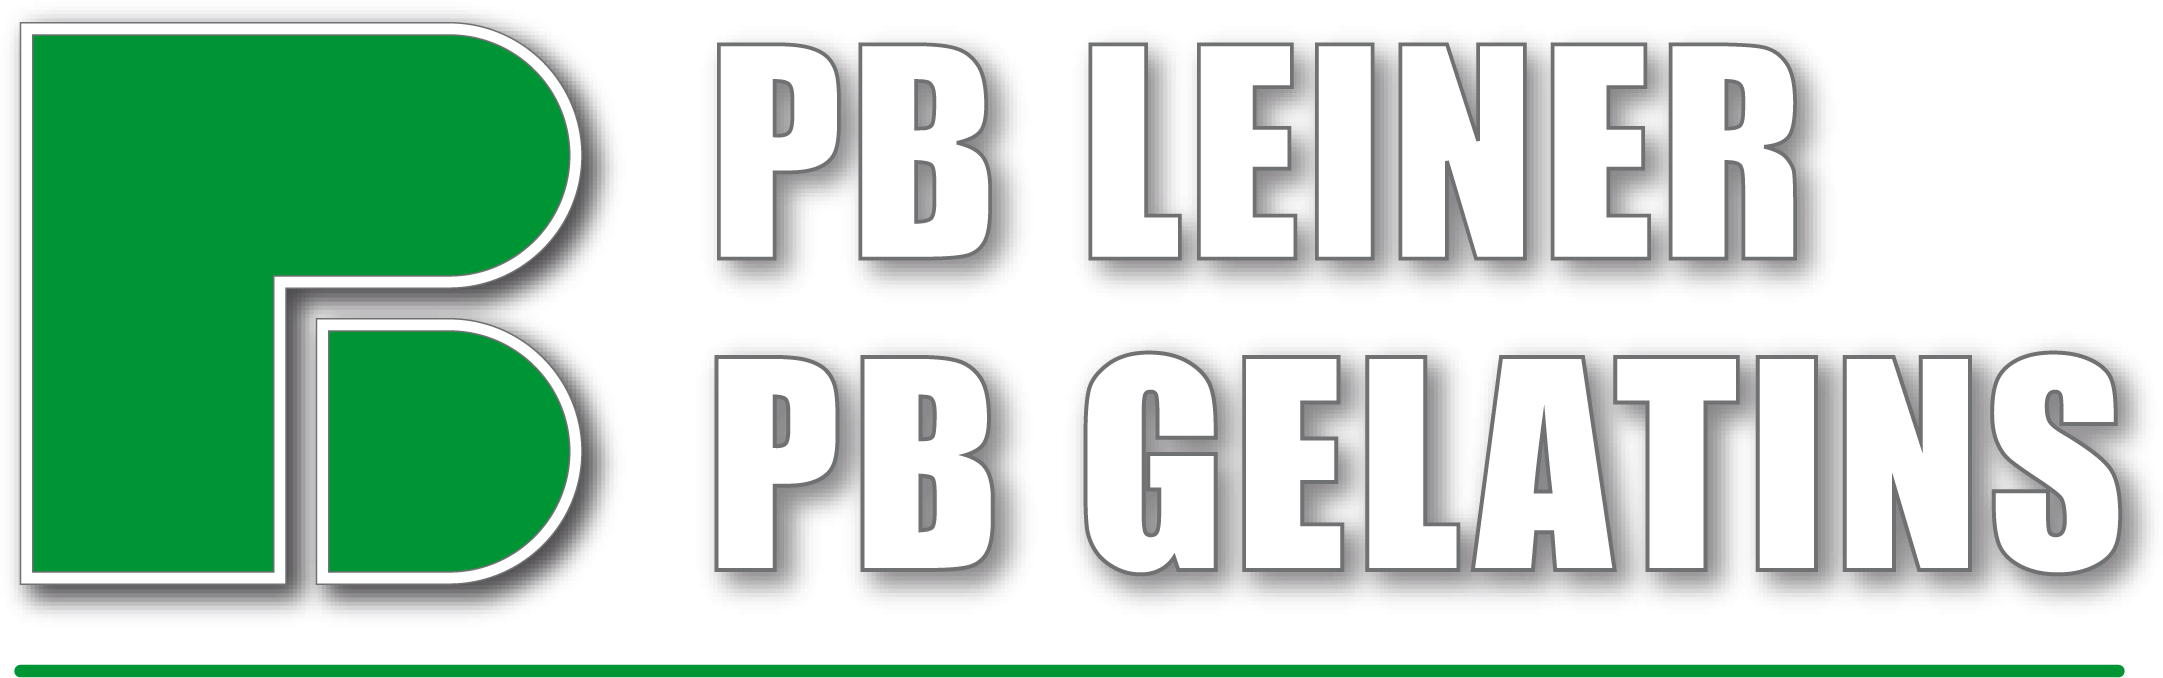 Logo Art - B'laster Products